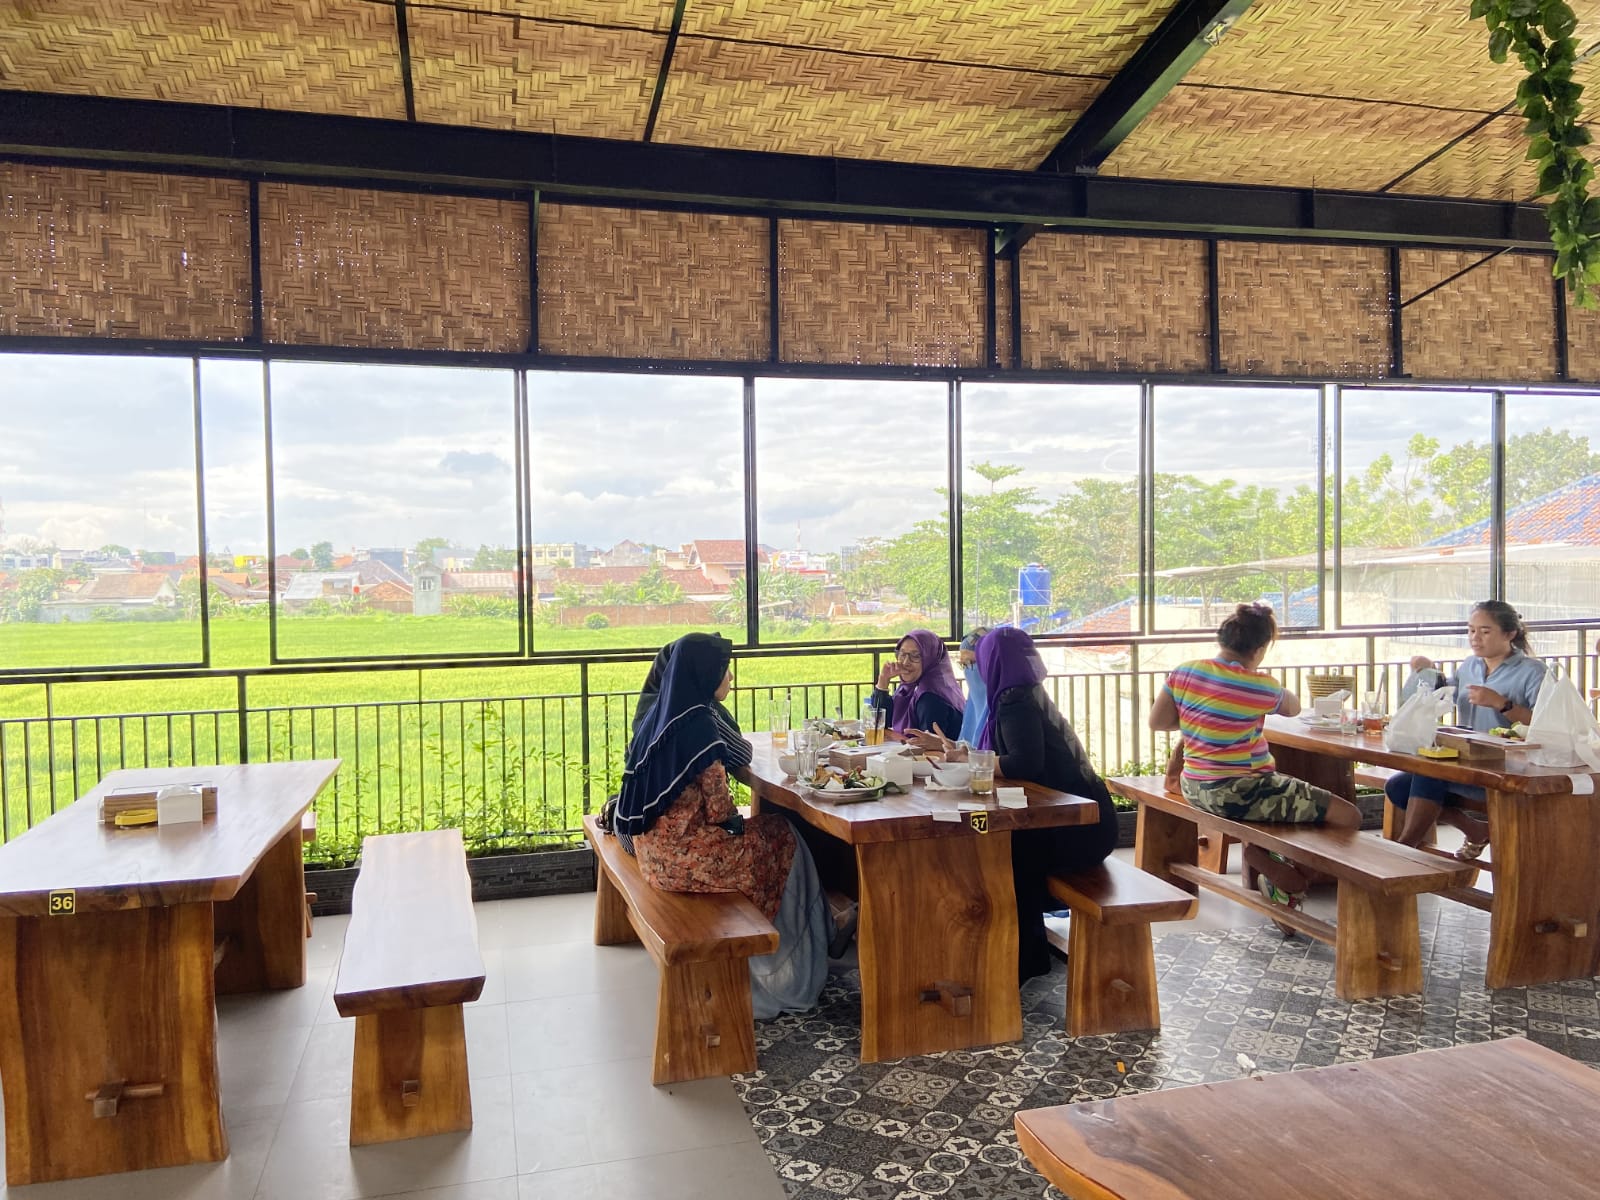 Restoran Alam Kuring Hadir di Lampung Dengan Nuansa Perdesaan